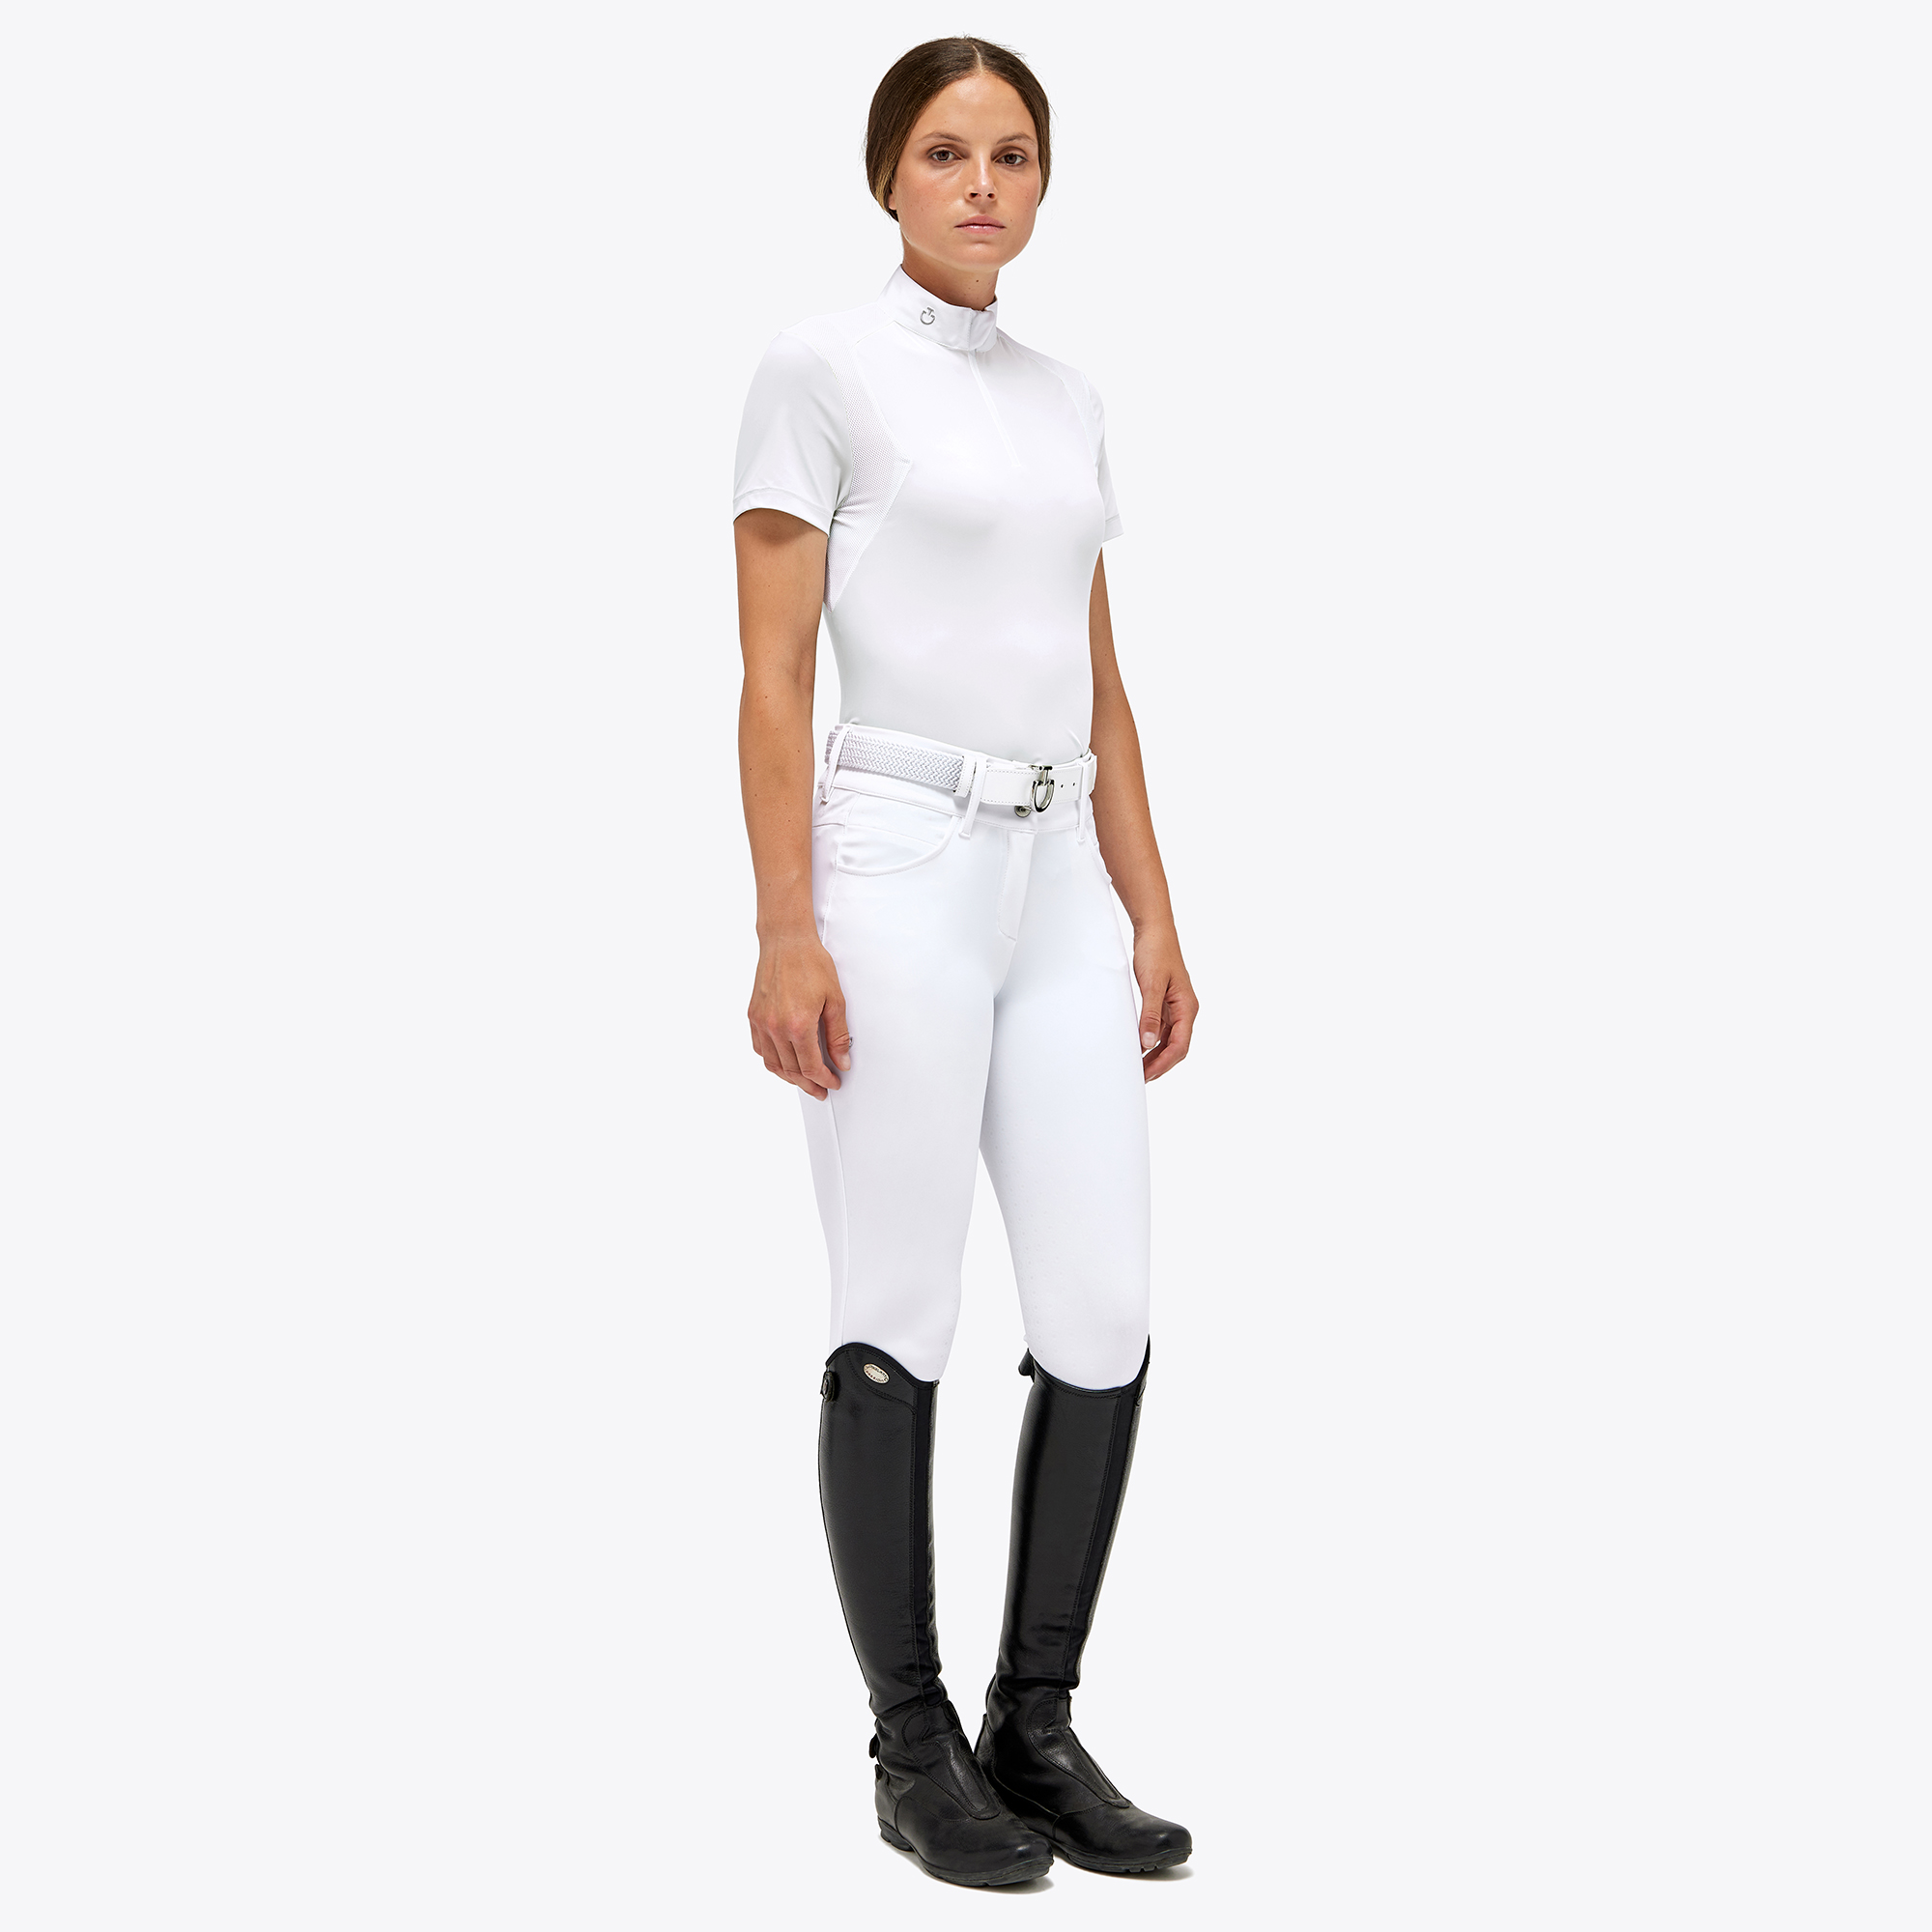 CAVALLERIA TOSCANA elegantes Damen Kurzarm Turniershirt Jersey Mesh - white/knit - M - 1